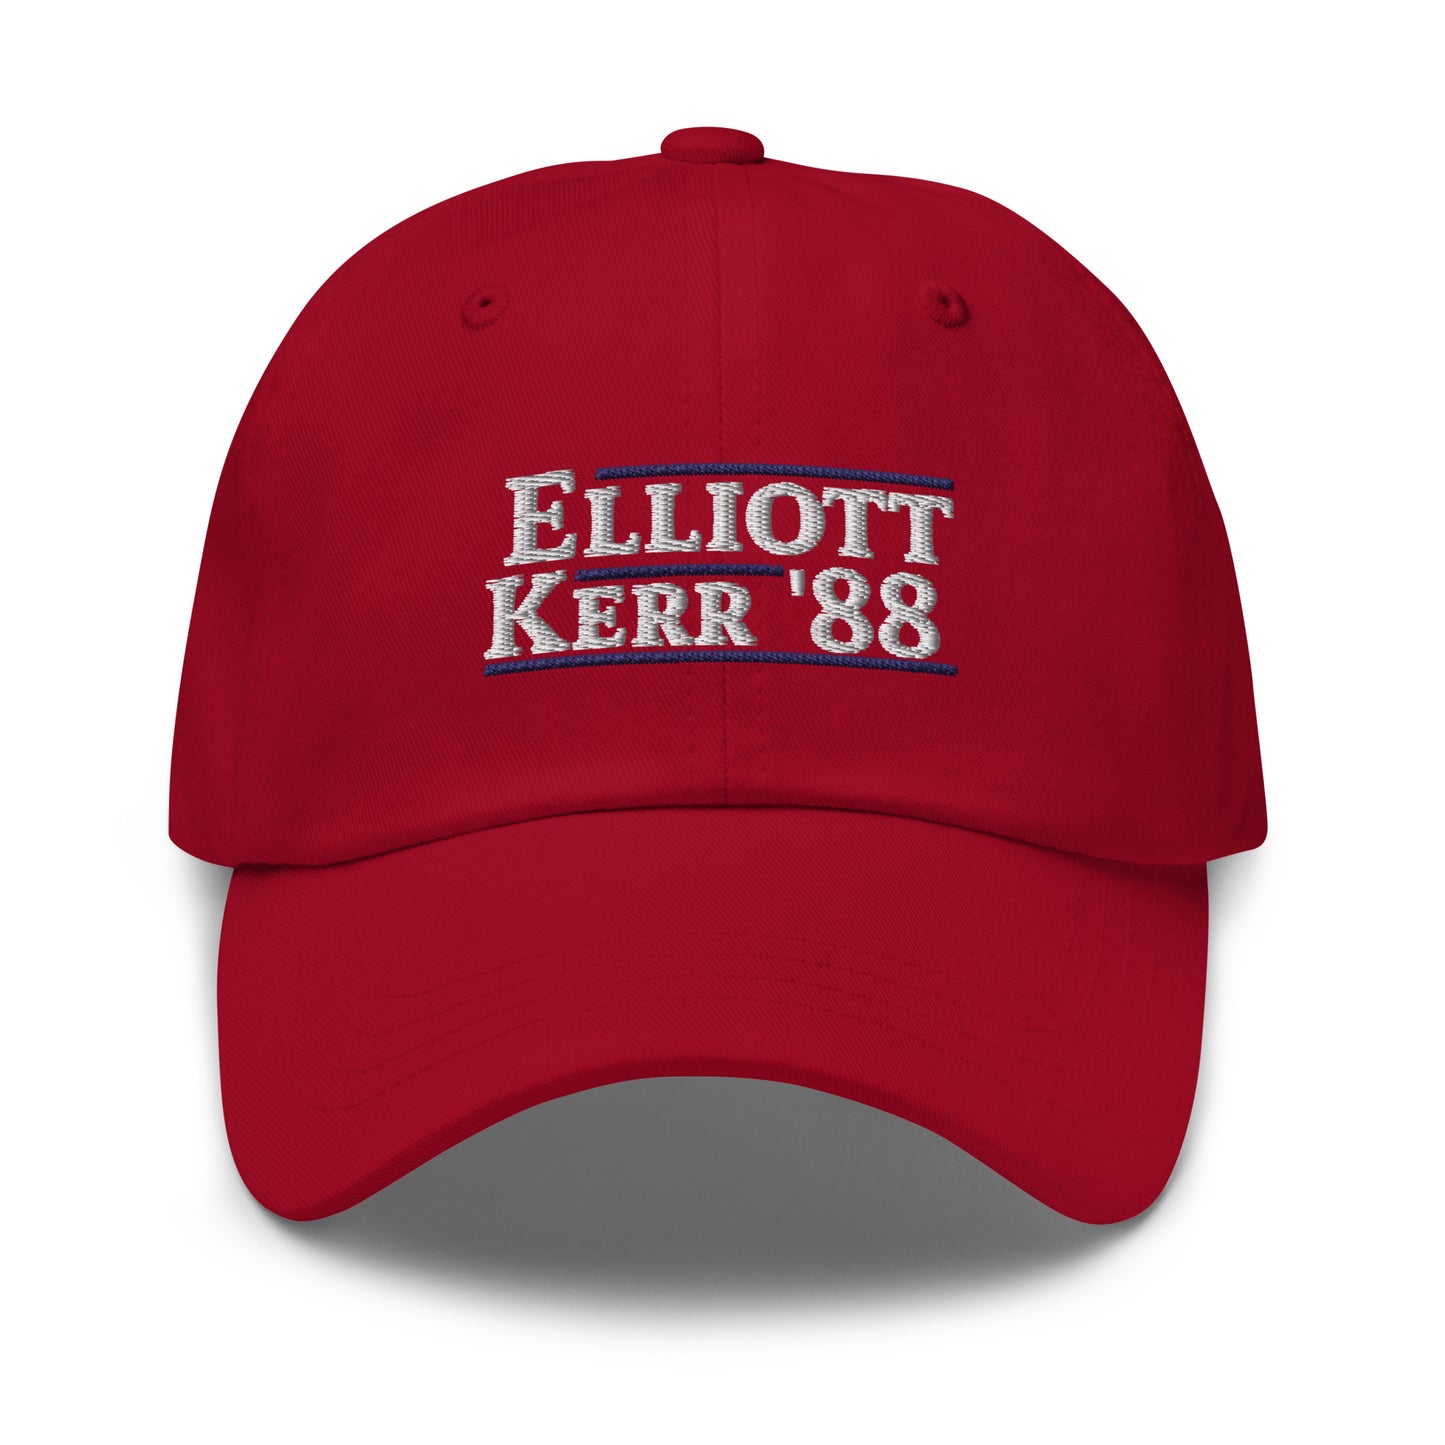 Elliott/Kerr '88 - Dad Hat